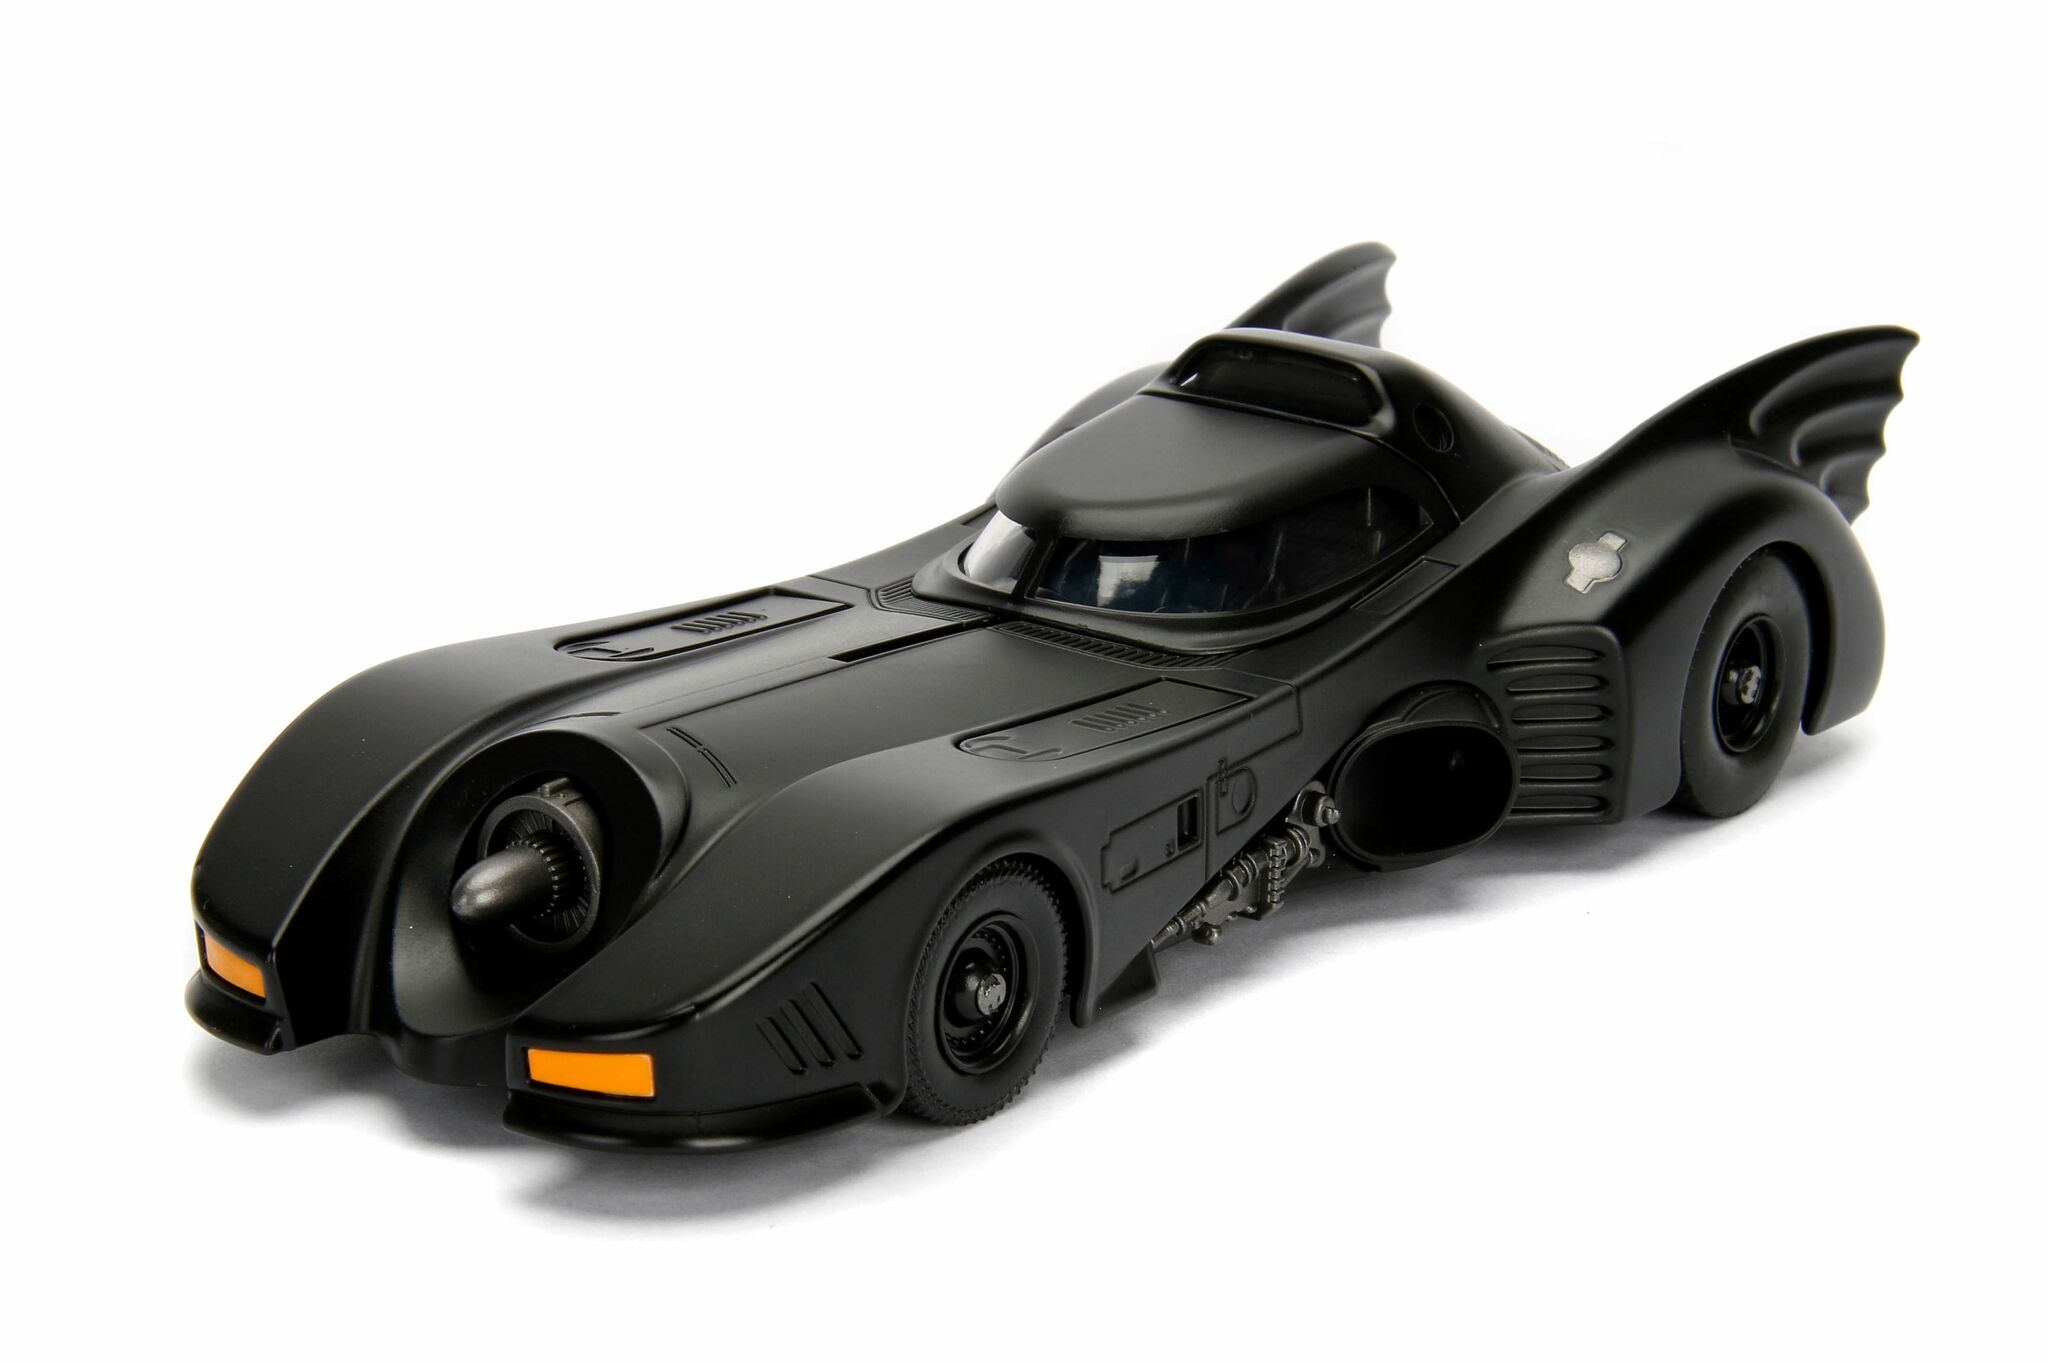 Skala 1/24: Batmobile & Batman figure  Die-cast kit: 30874 fr Jada